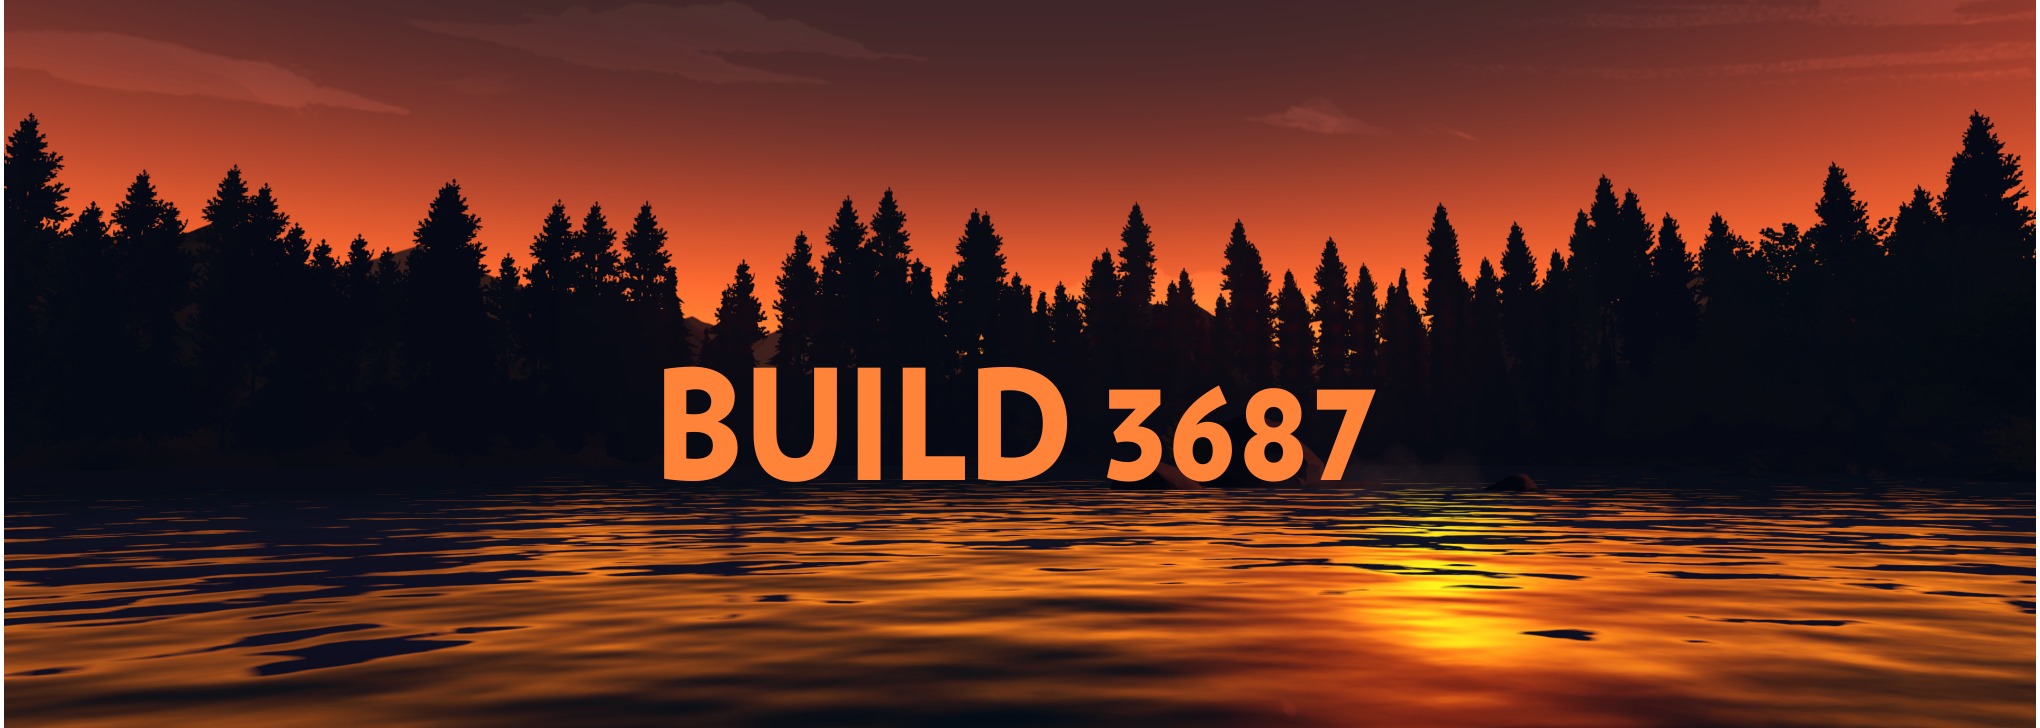 Build 3687